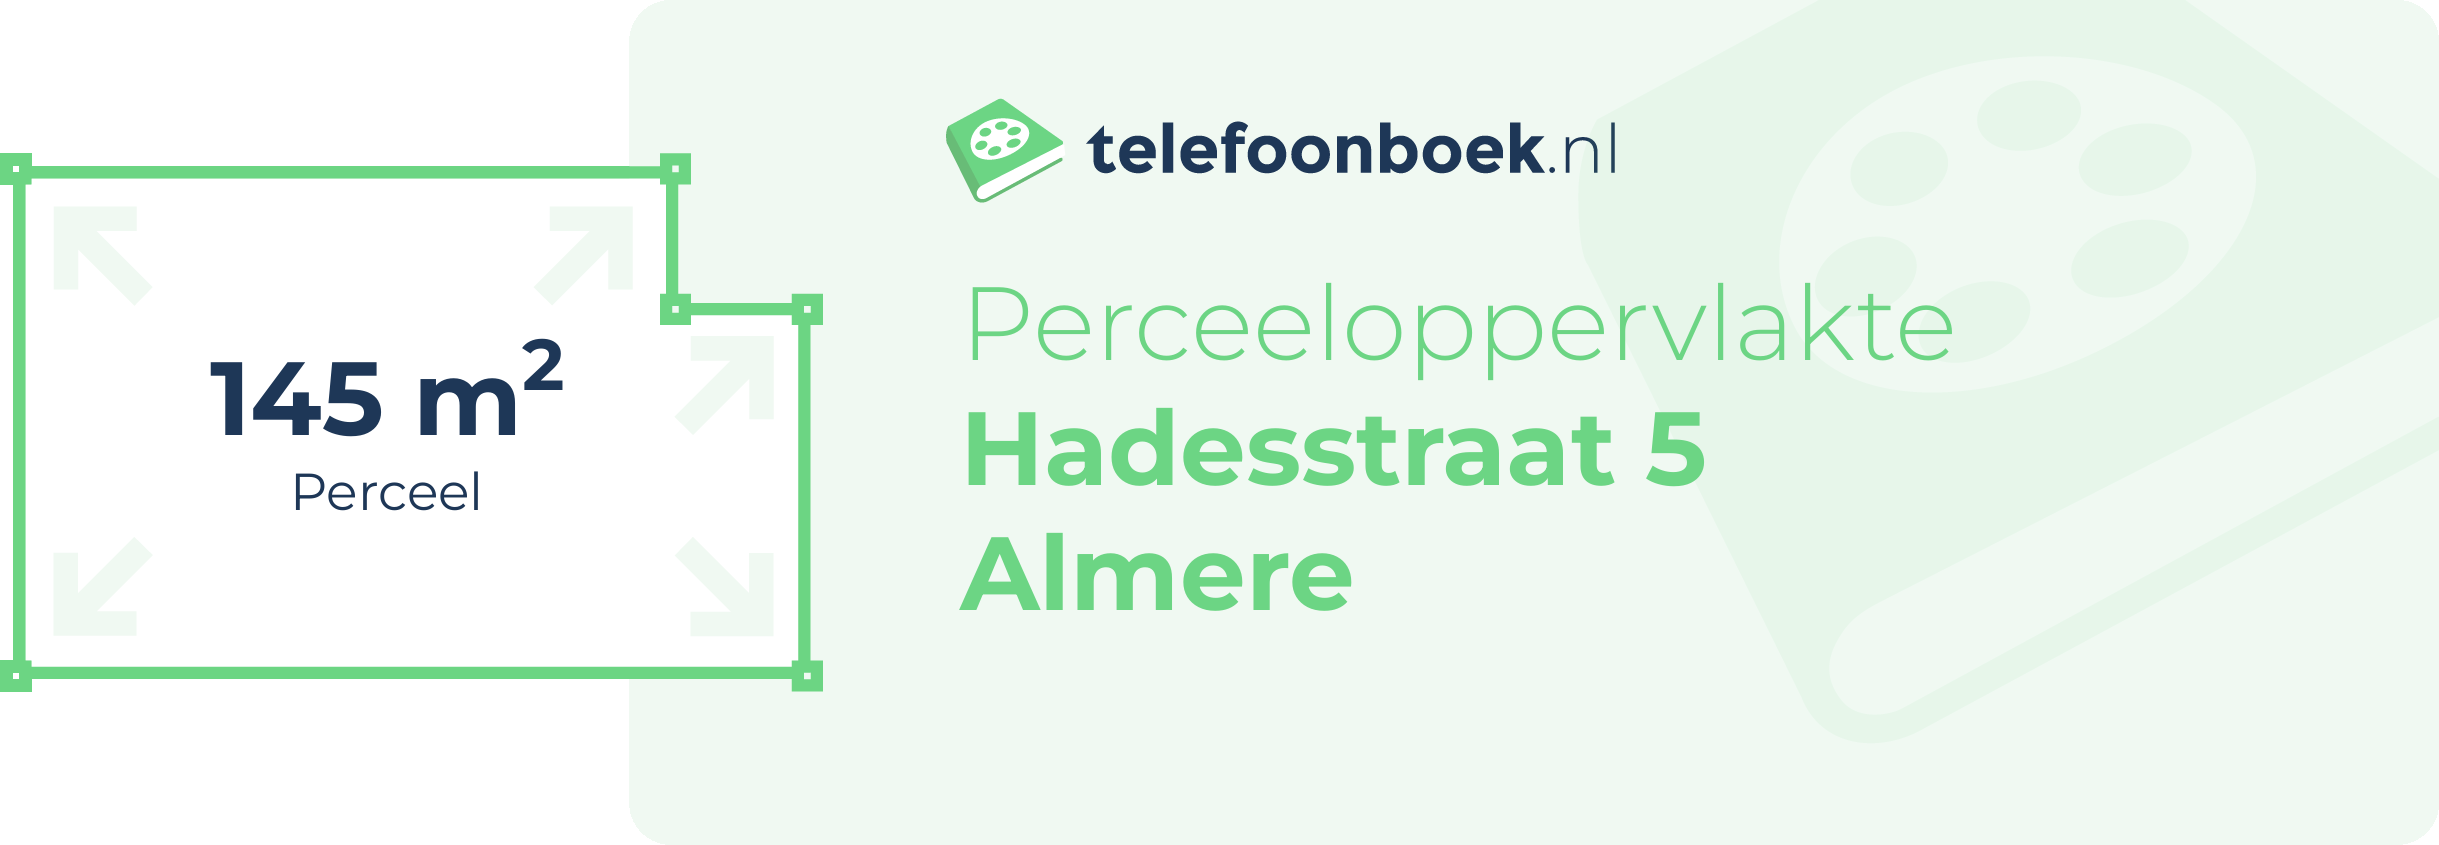 Perceeloppervlakte Hadesstraat 5 Almere